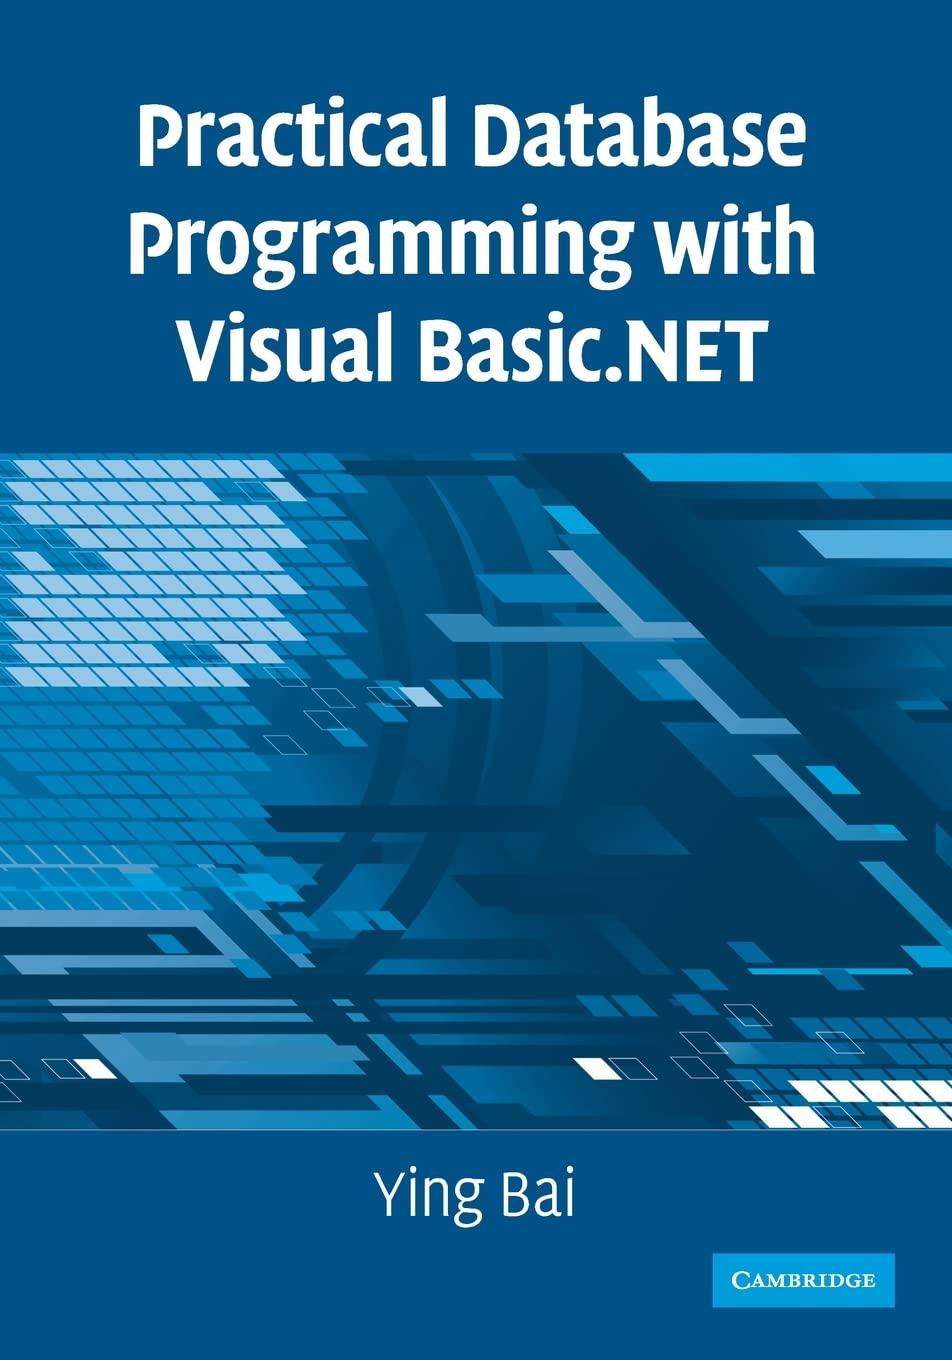 practical database programming with visual basic.net 1st edition ying bai 0521712351, 978-0521712354